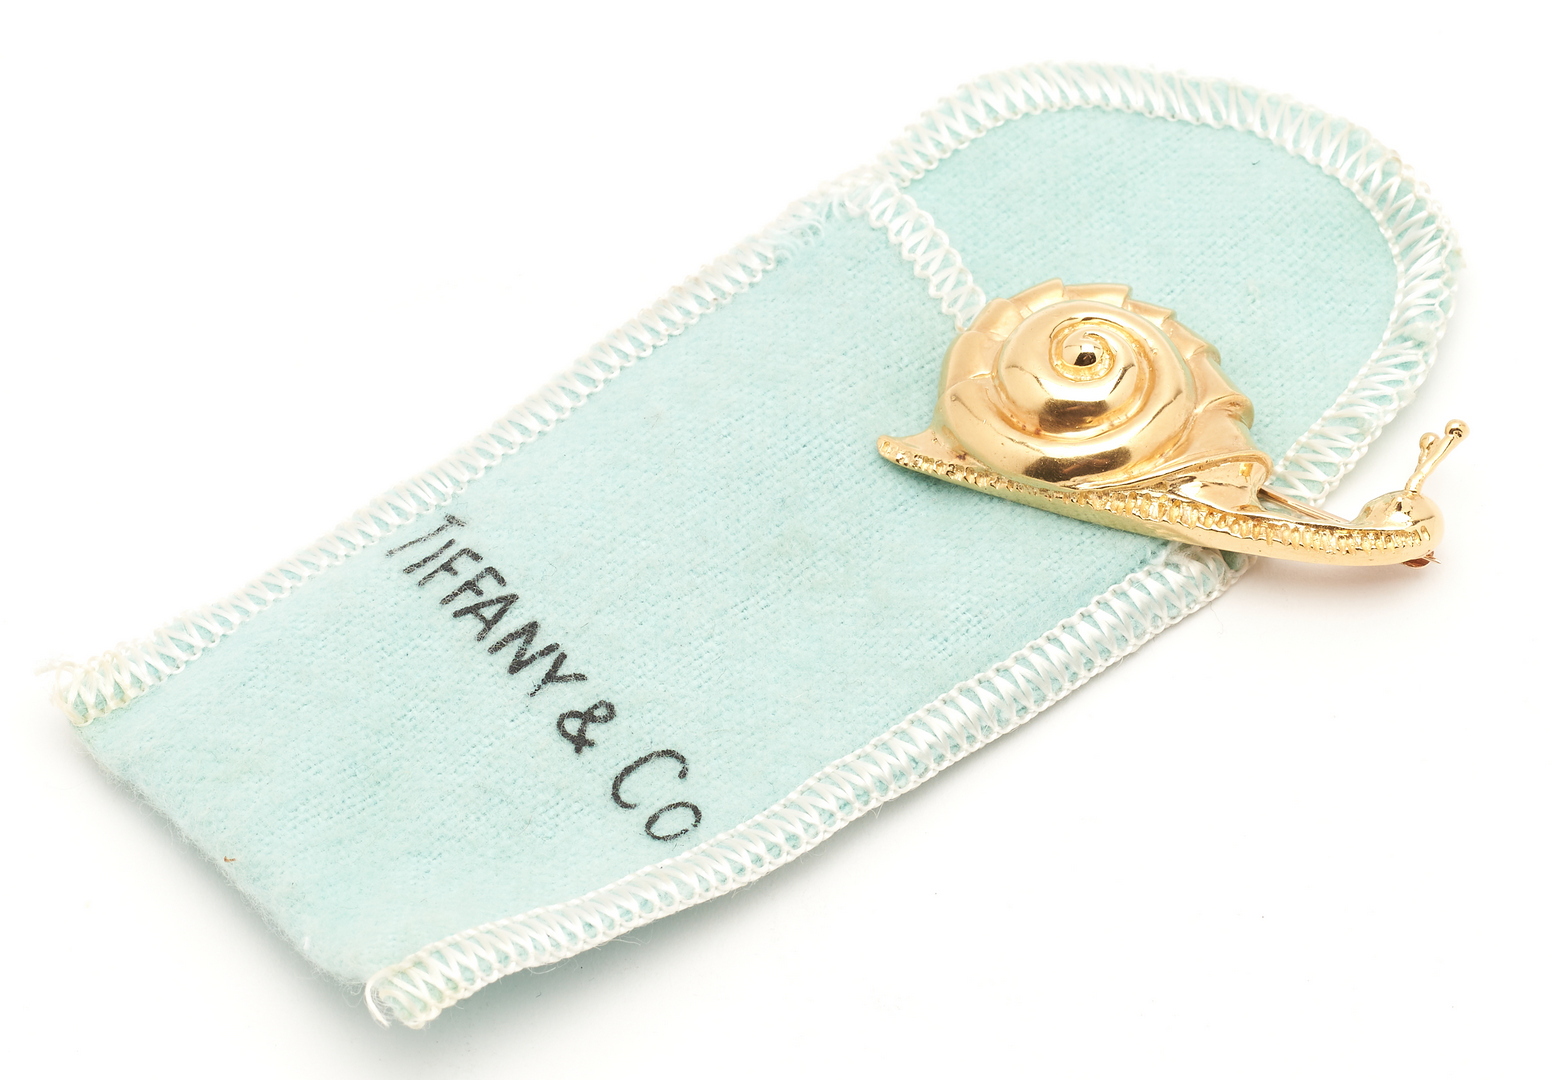 Lot 835: Tiffany & Co. 18K Snail Brooch